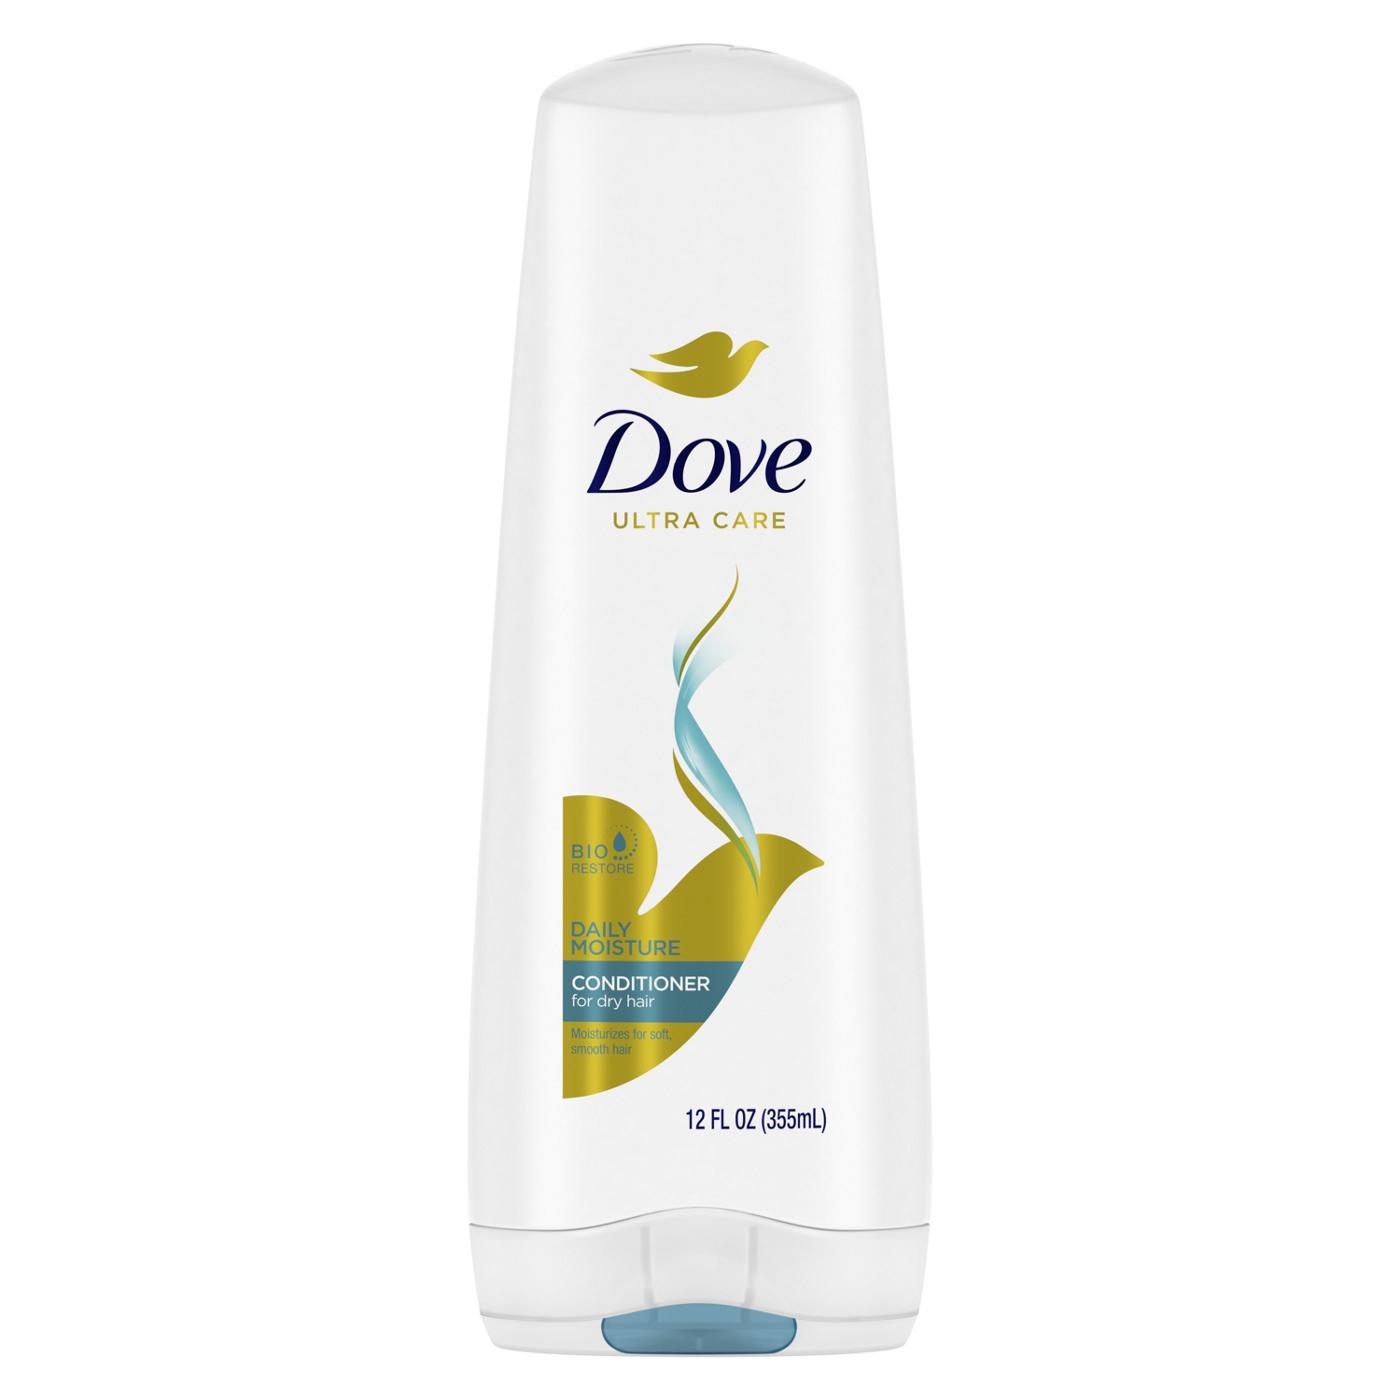 Dove Ultra Care Conditioner - Daily Moisture; image 1 of 8